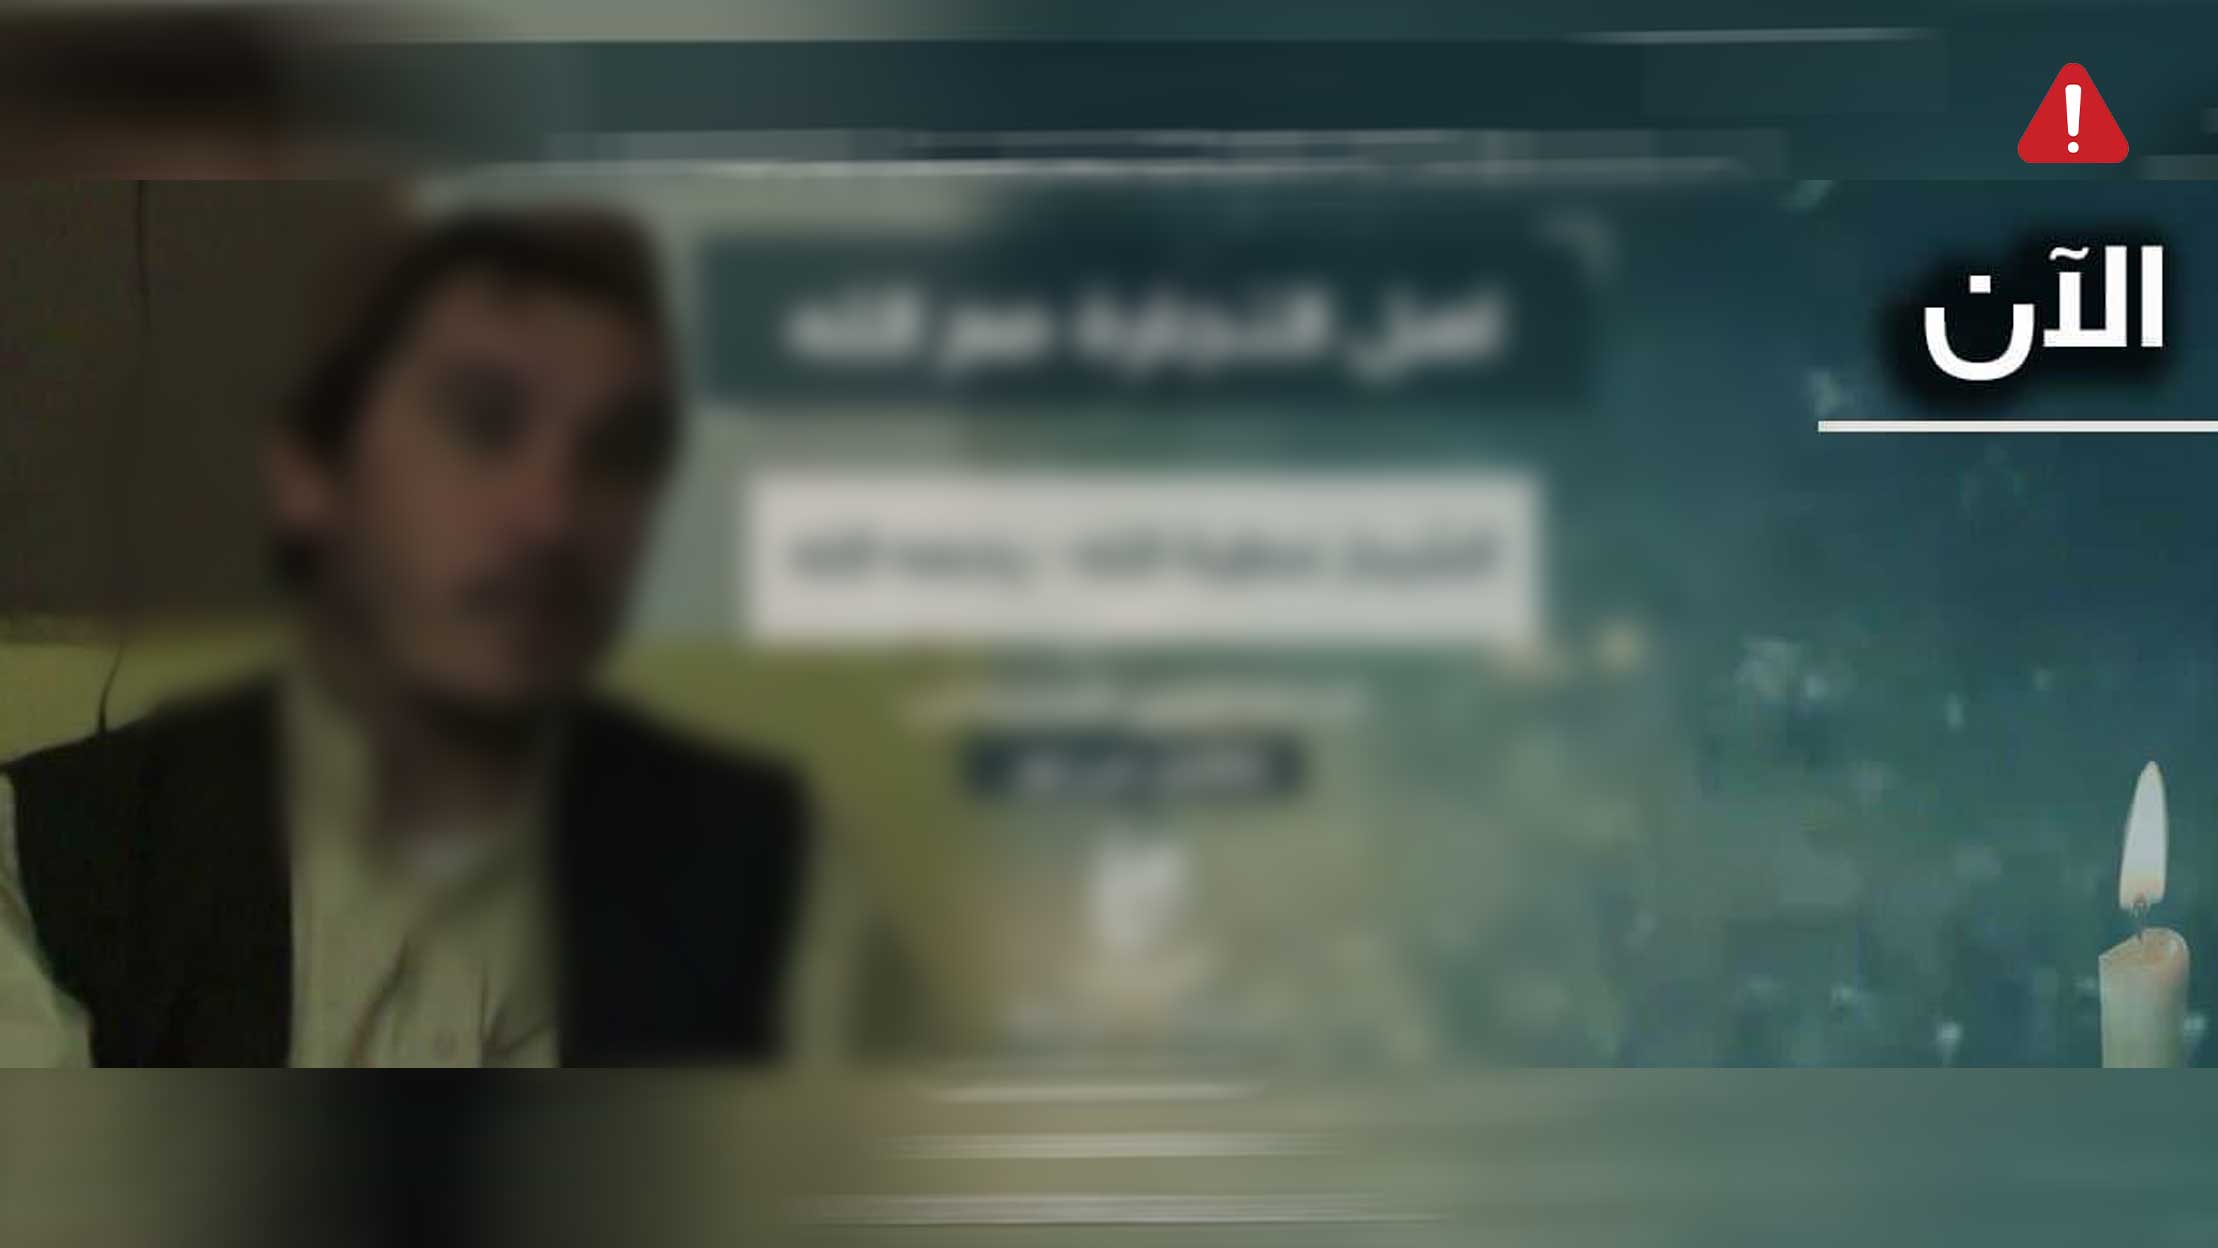 TKD MONITORING: New Video from Al-Qaida Featuring Slain Commander Atiyah Abdul Rahman